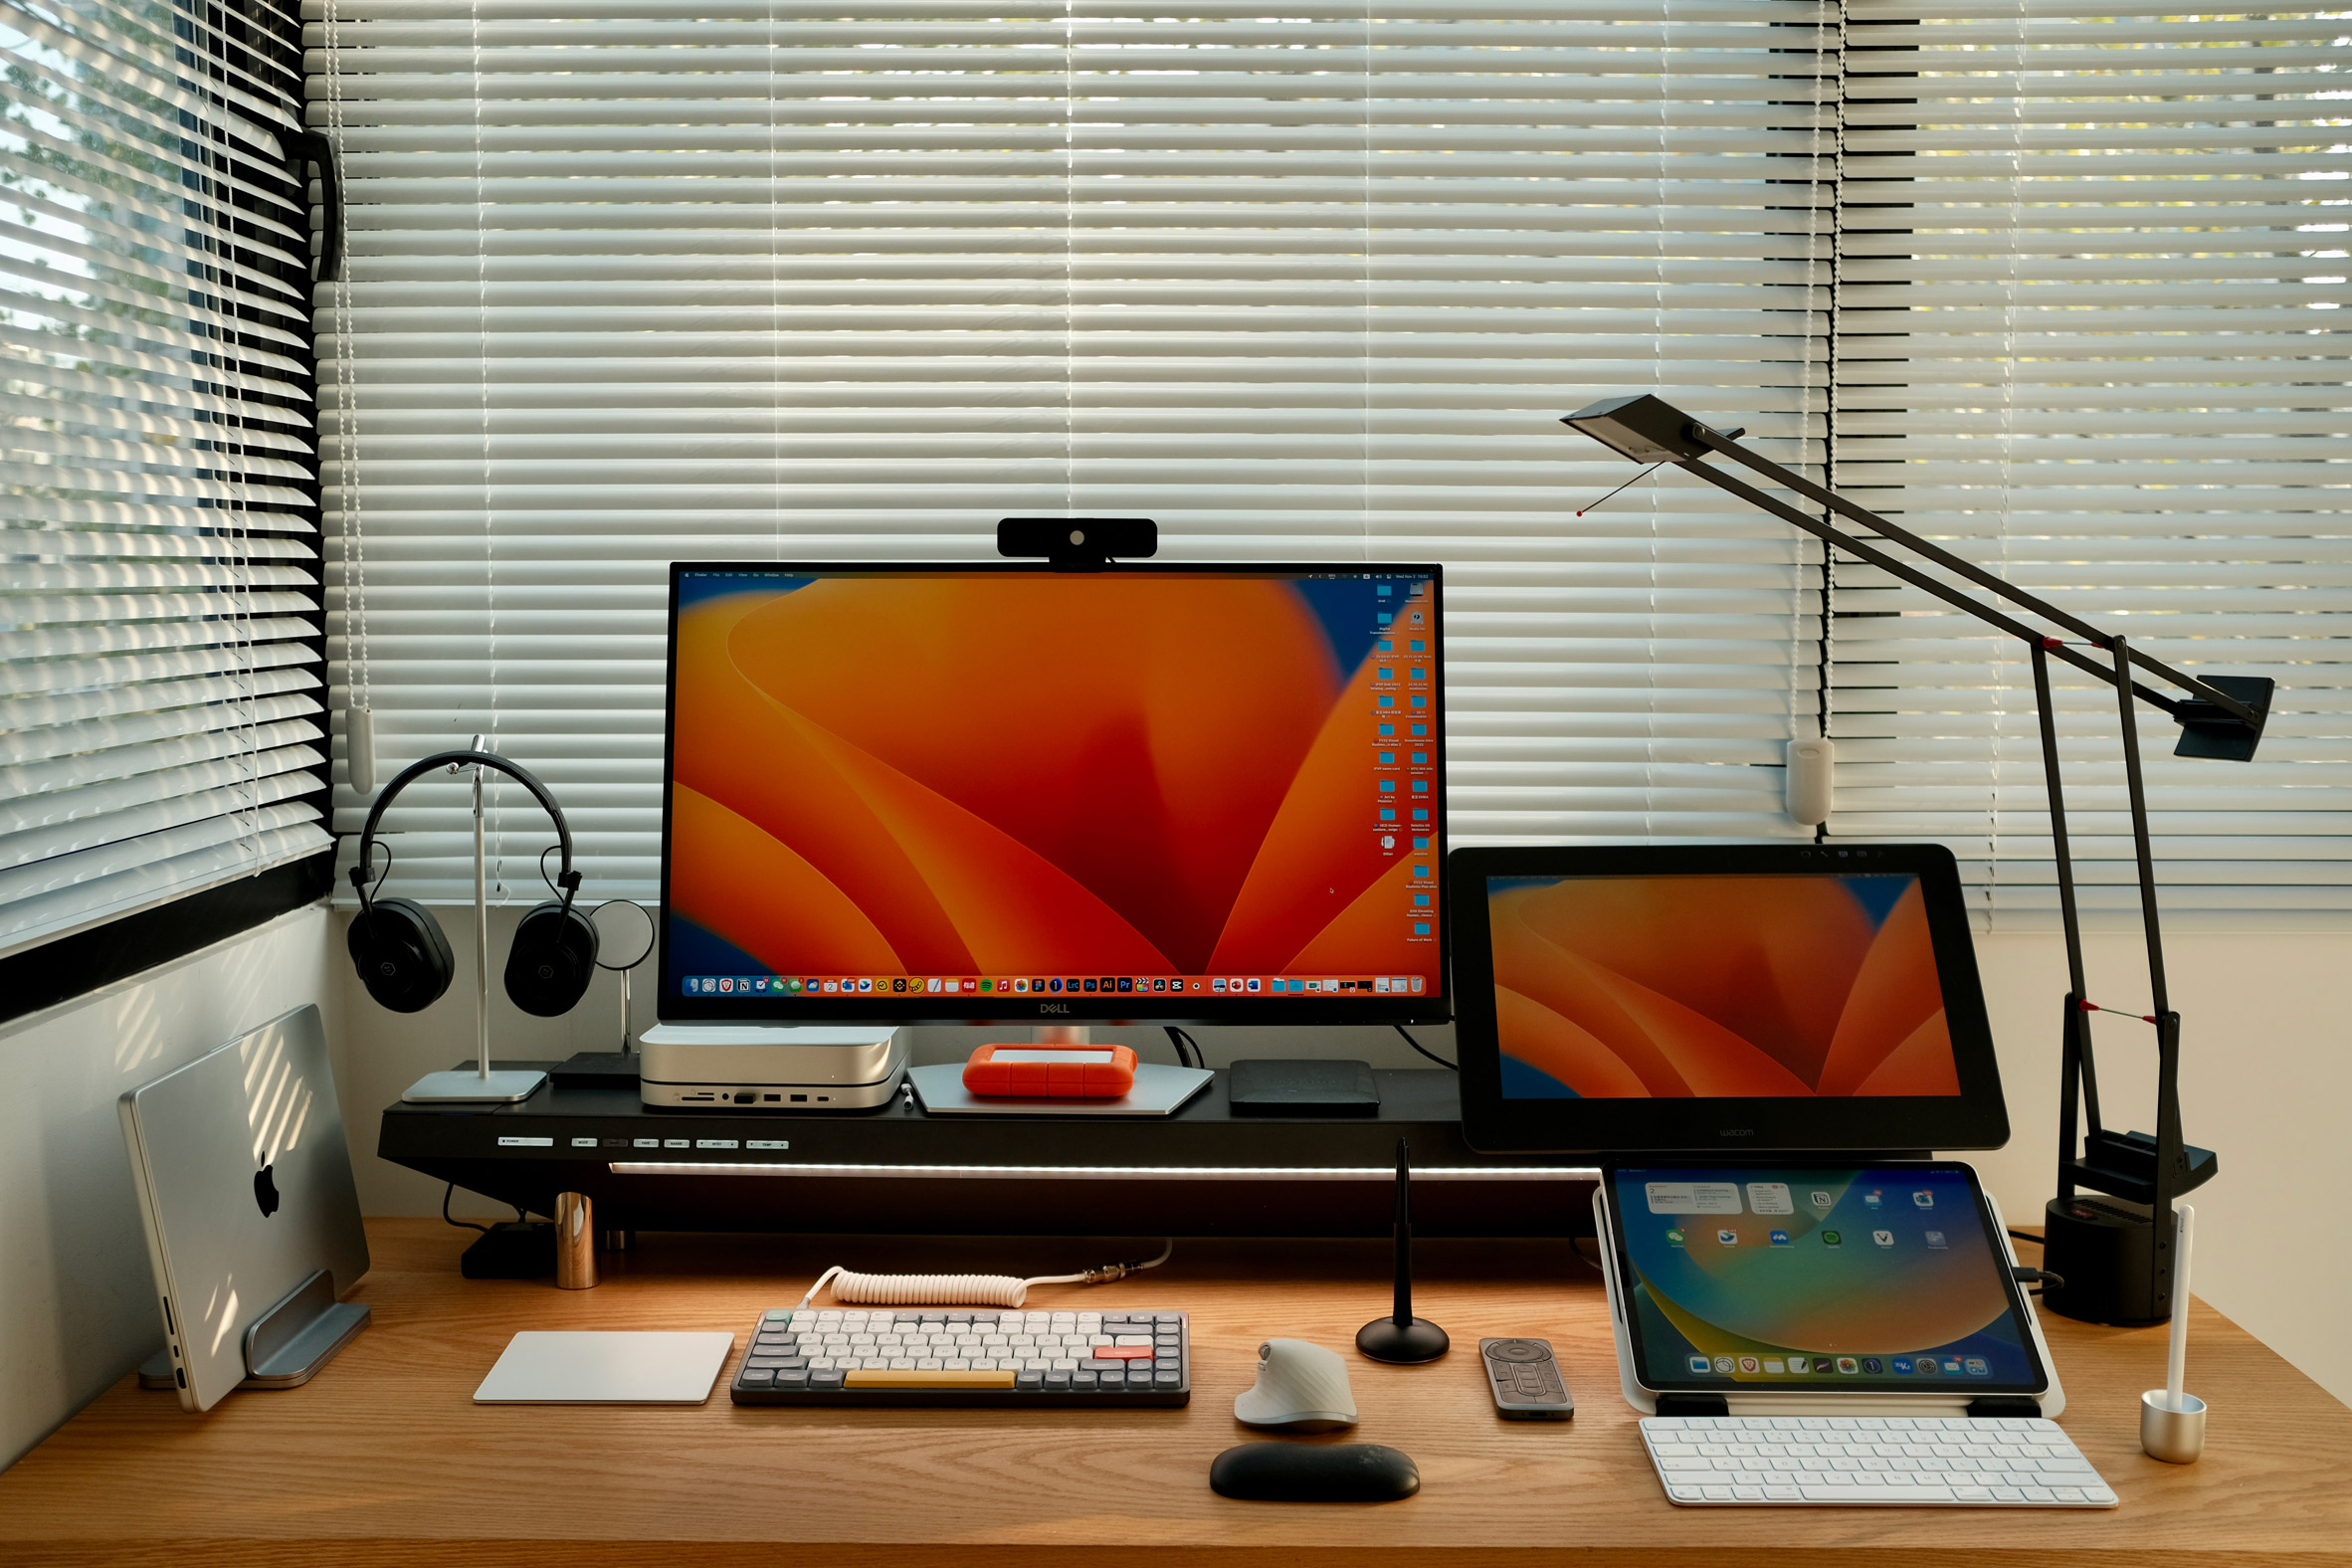 Home Office Desk - Wing Shelf Desk Accessories